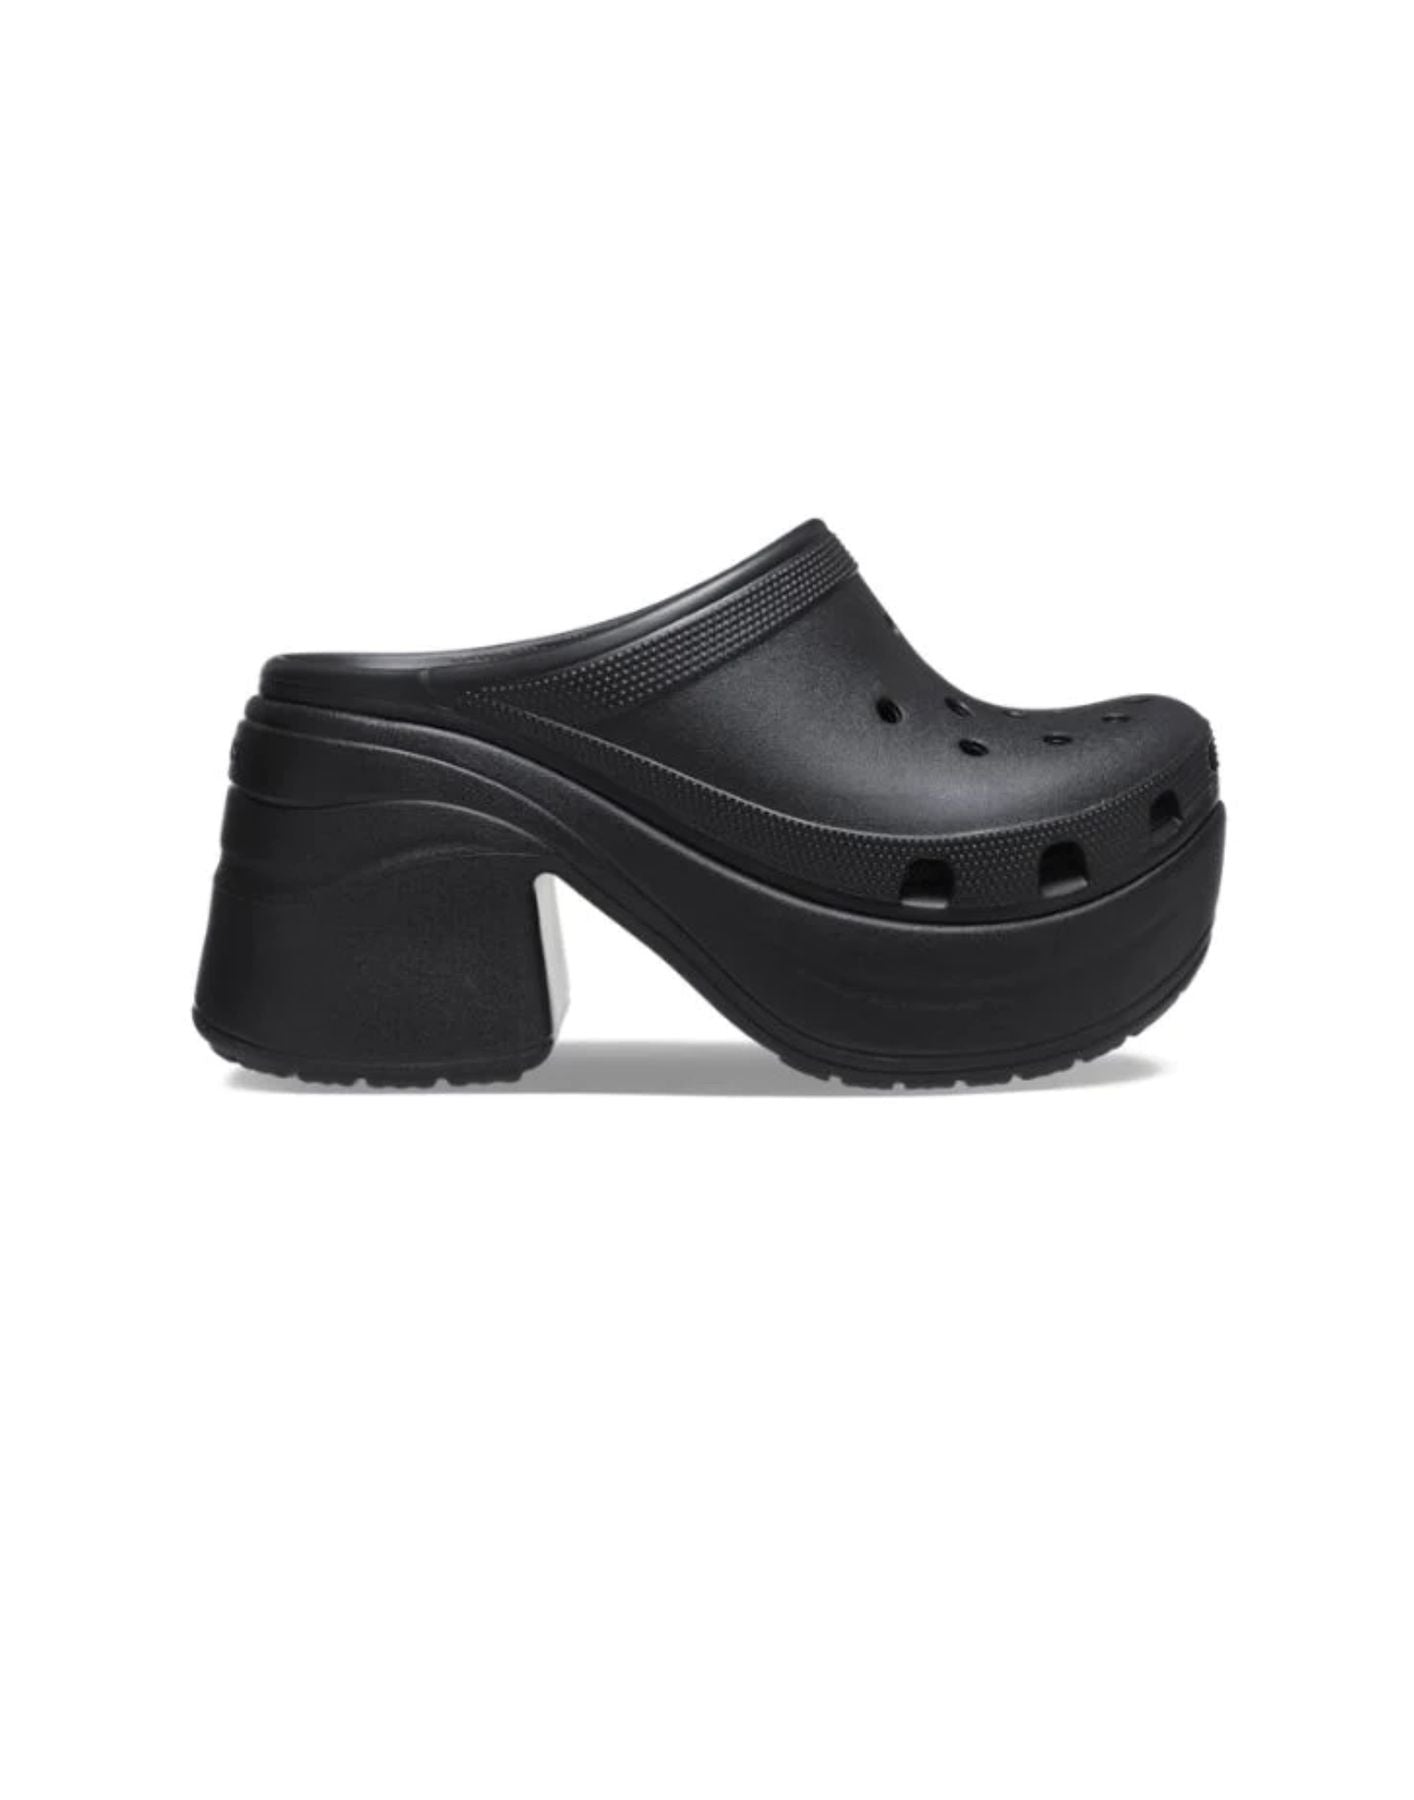 Zapatos para mujer 208547 001 Crocs negros